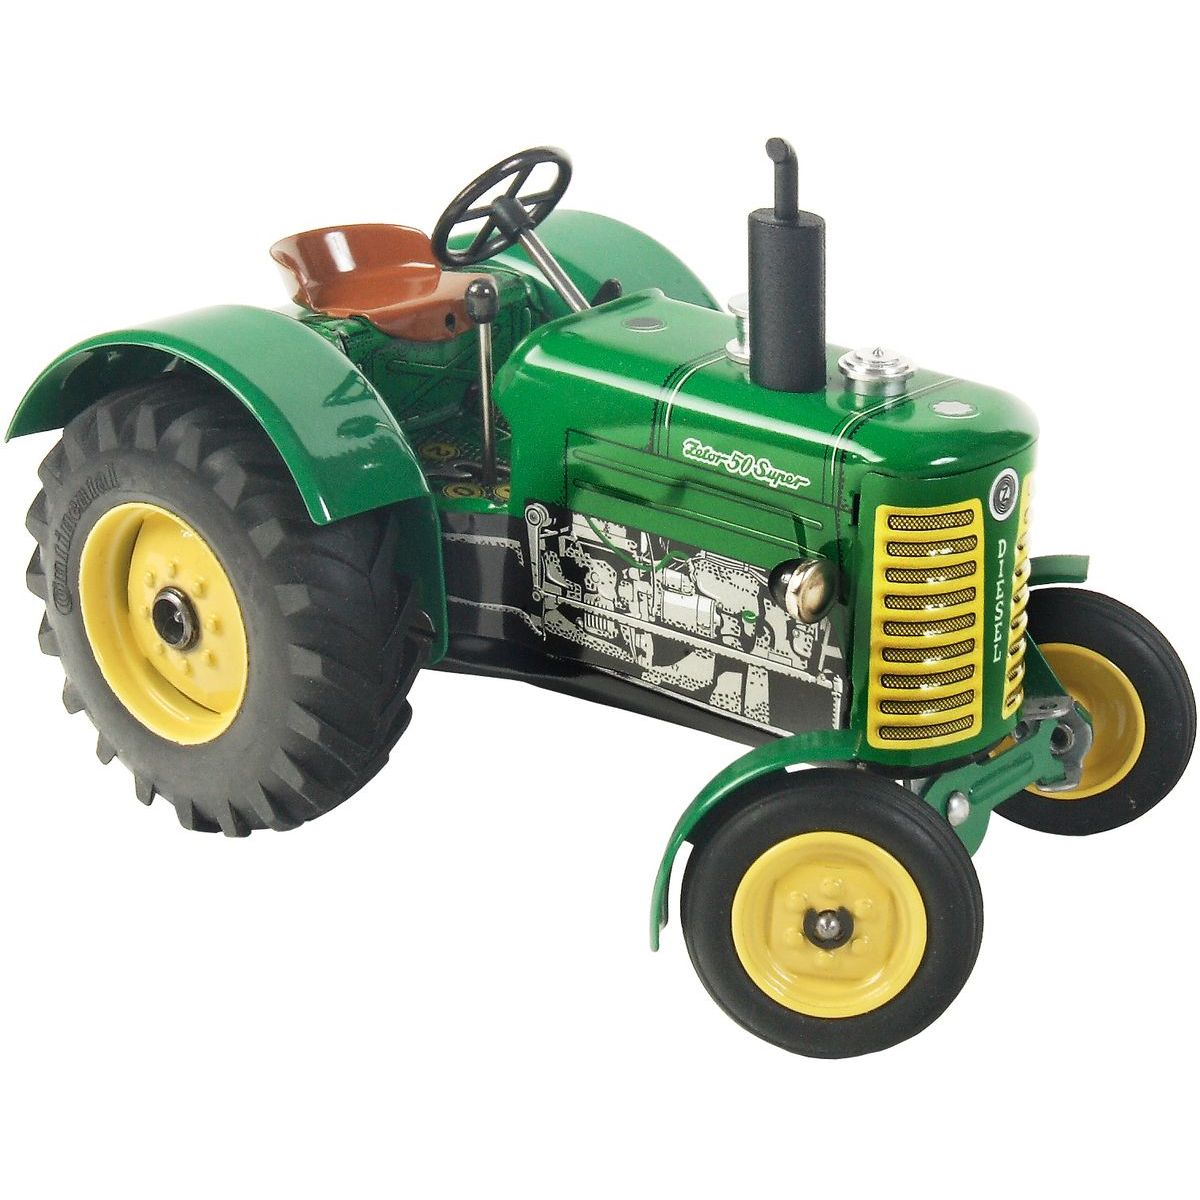 Kovap Traktor Zetor 50 Super - Zelená